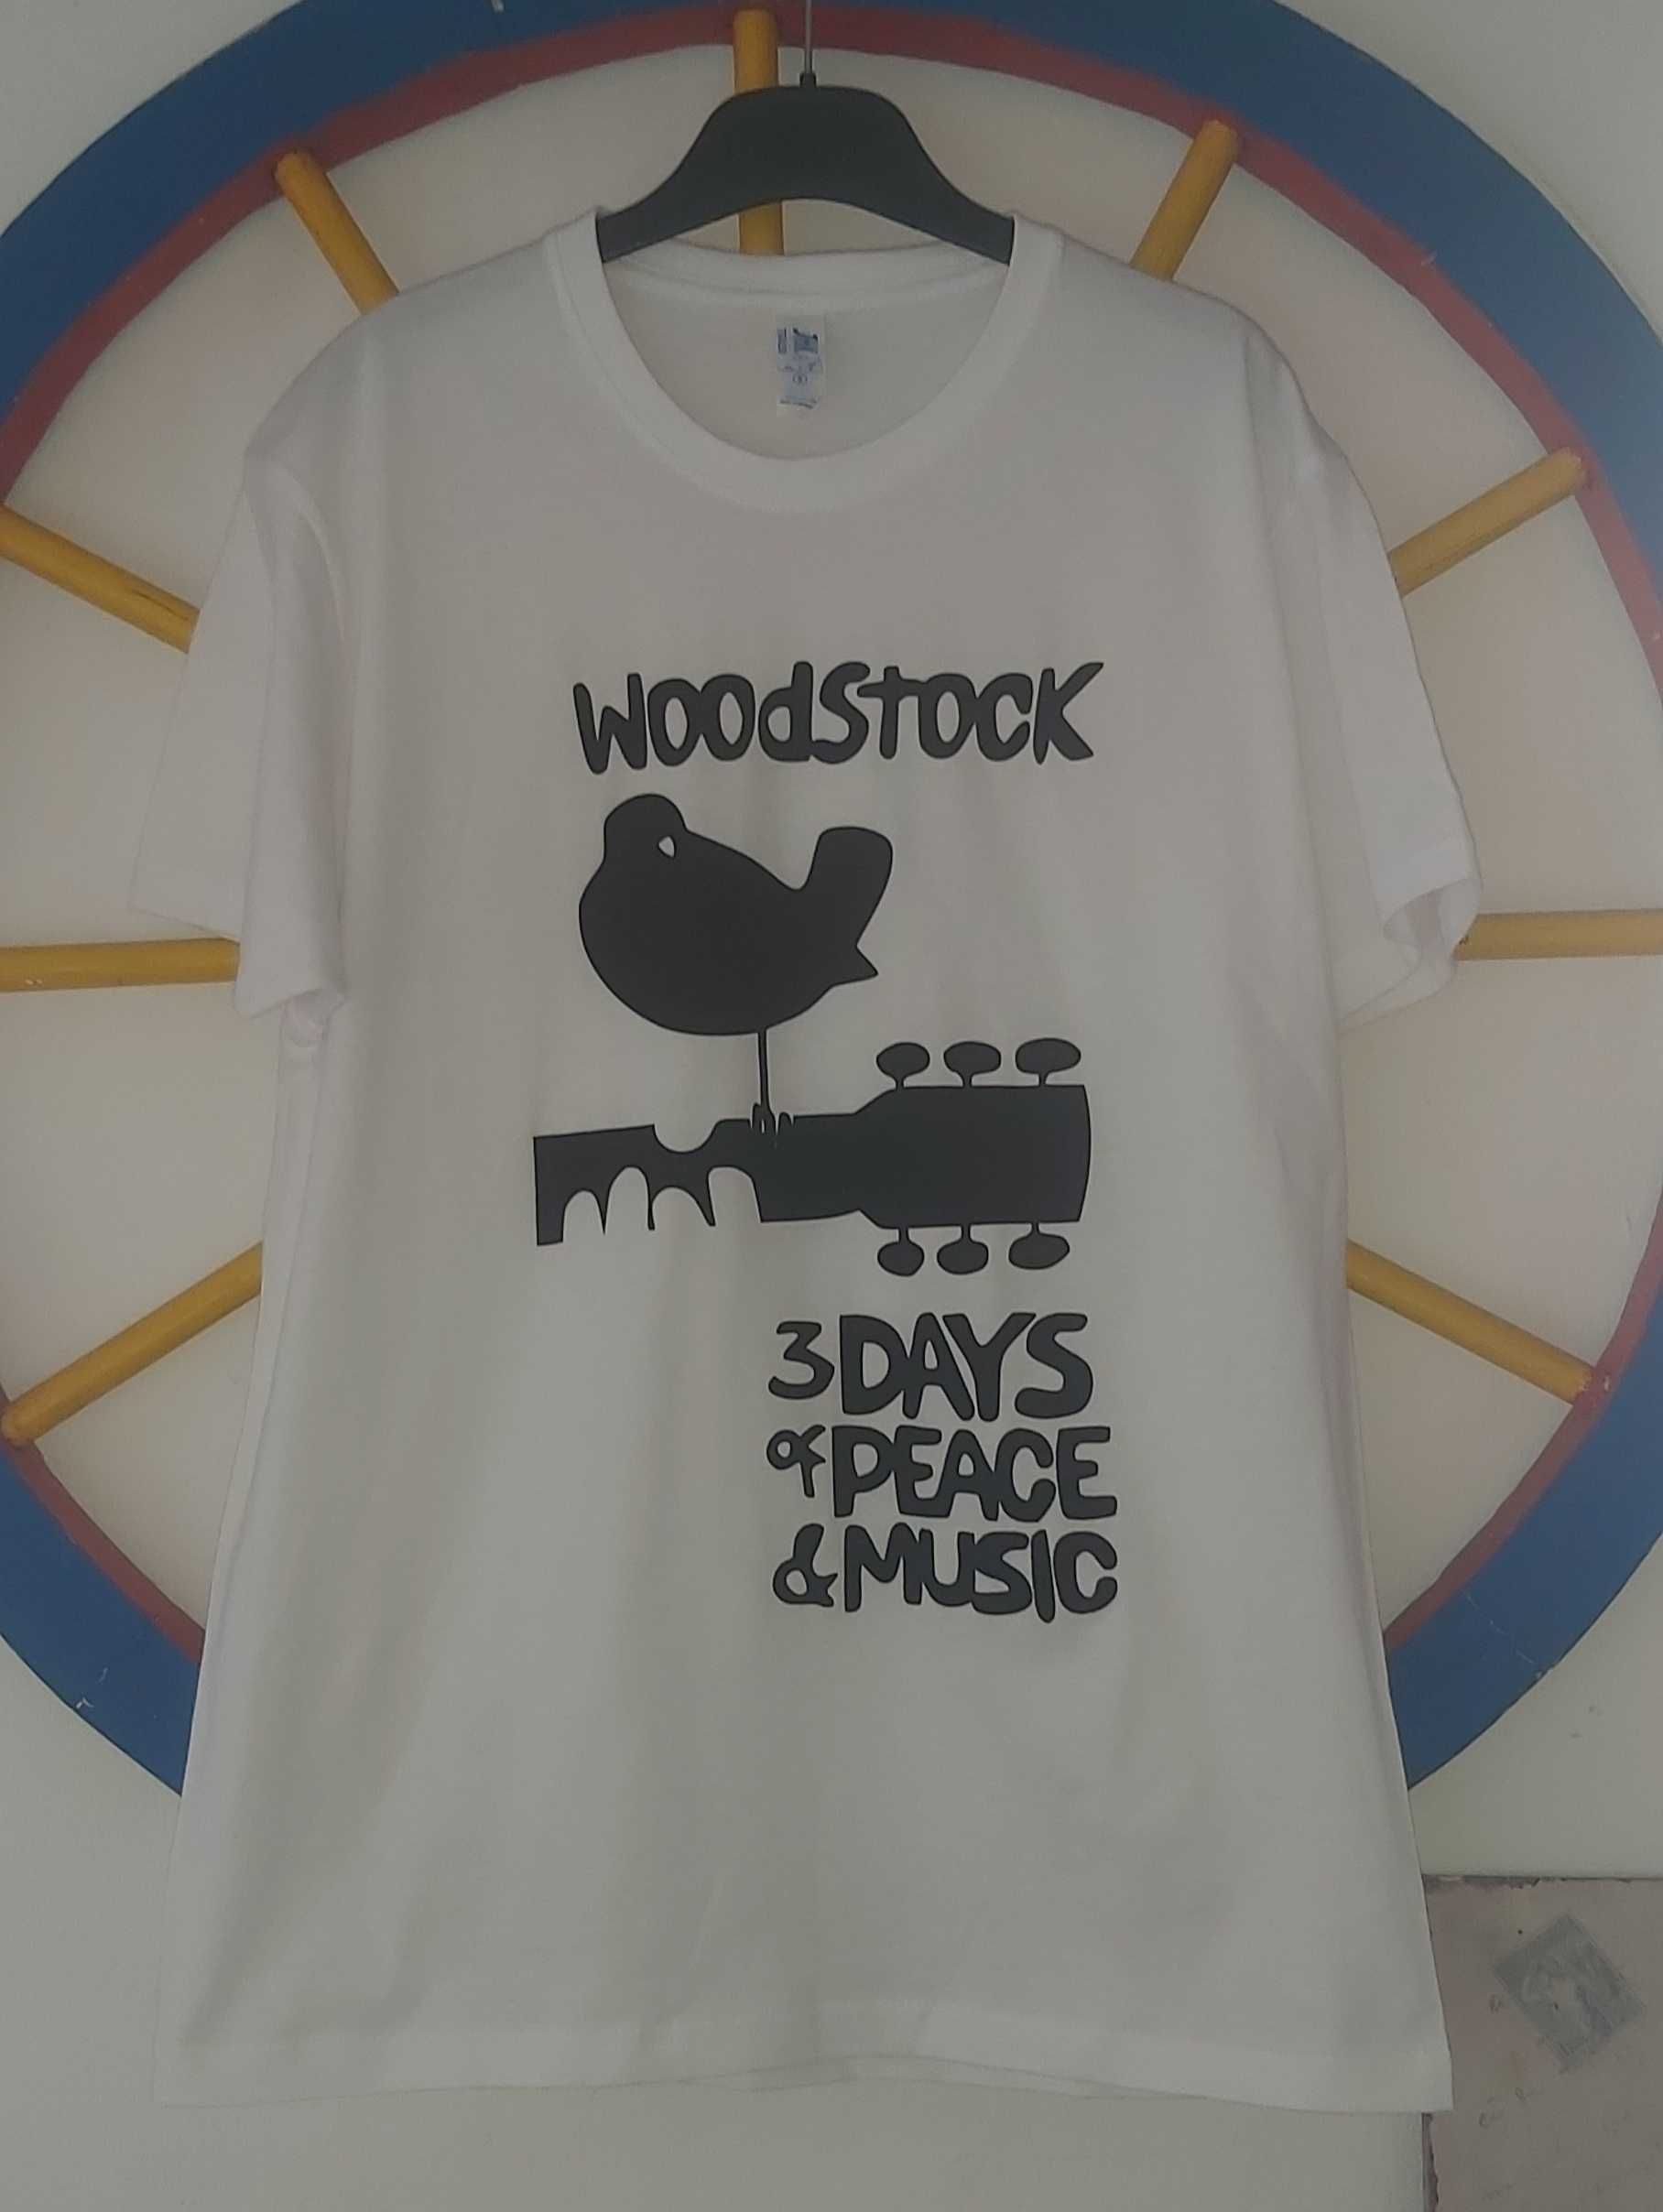 Iggy Pop  The Stooges  Woodstock Creedence Clearwater Revival - Tshirt